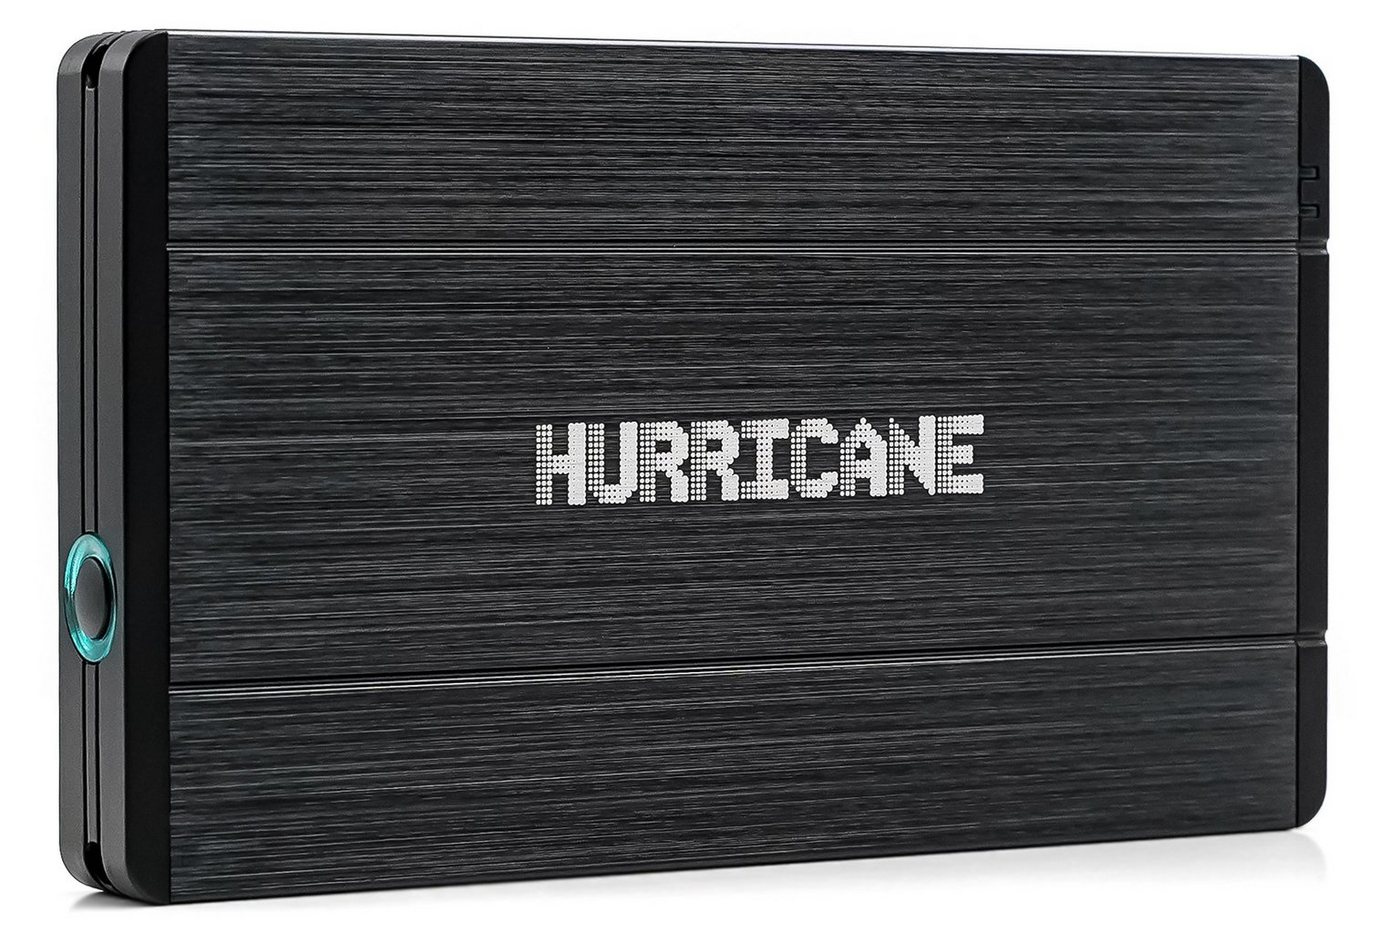 HURRICANE Hurricane 12.5mm GD25650 250GB 2.5 USB 3.0 Externe Aluminium Festpla externe HDD-Festplatte" von HURRICANE